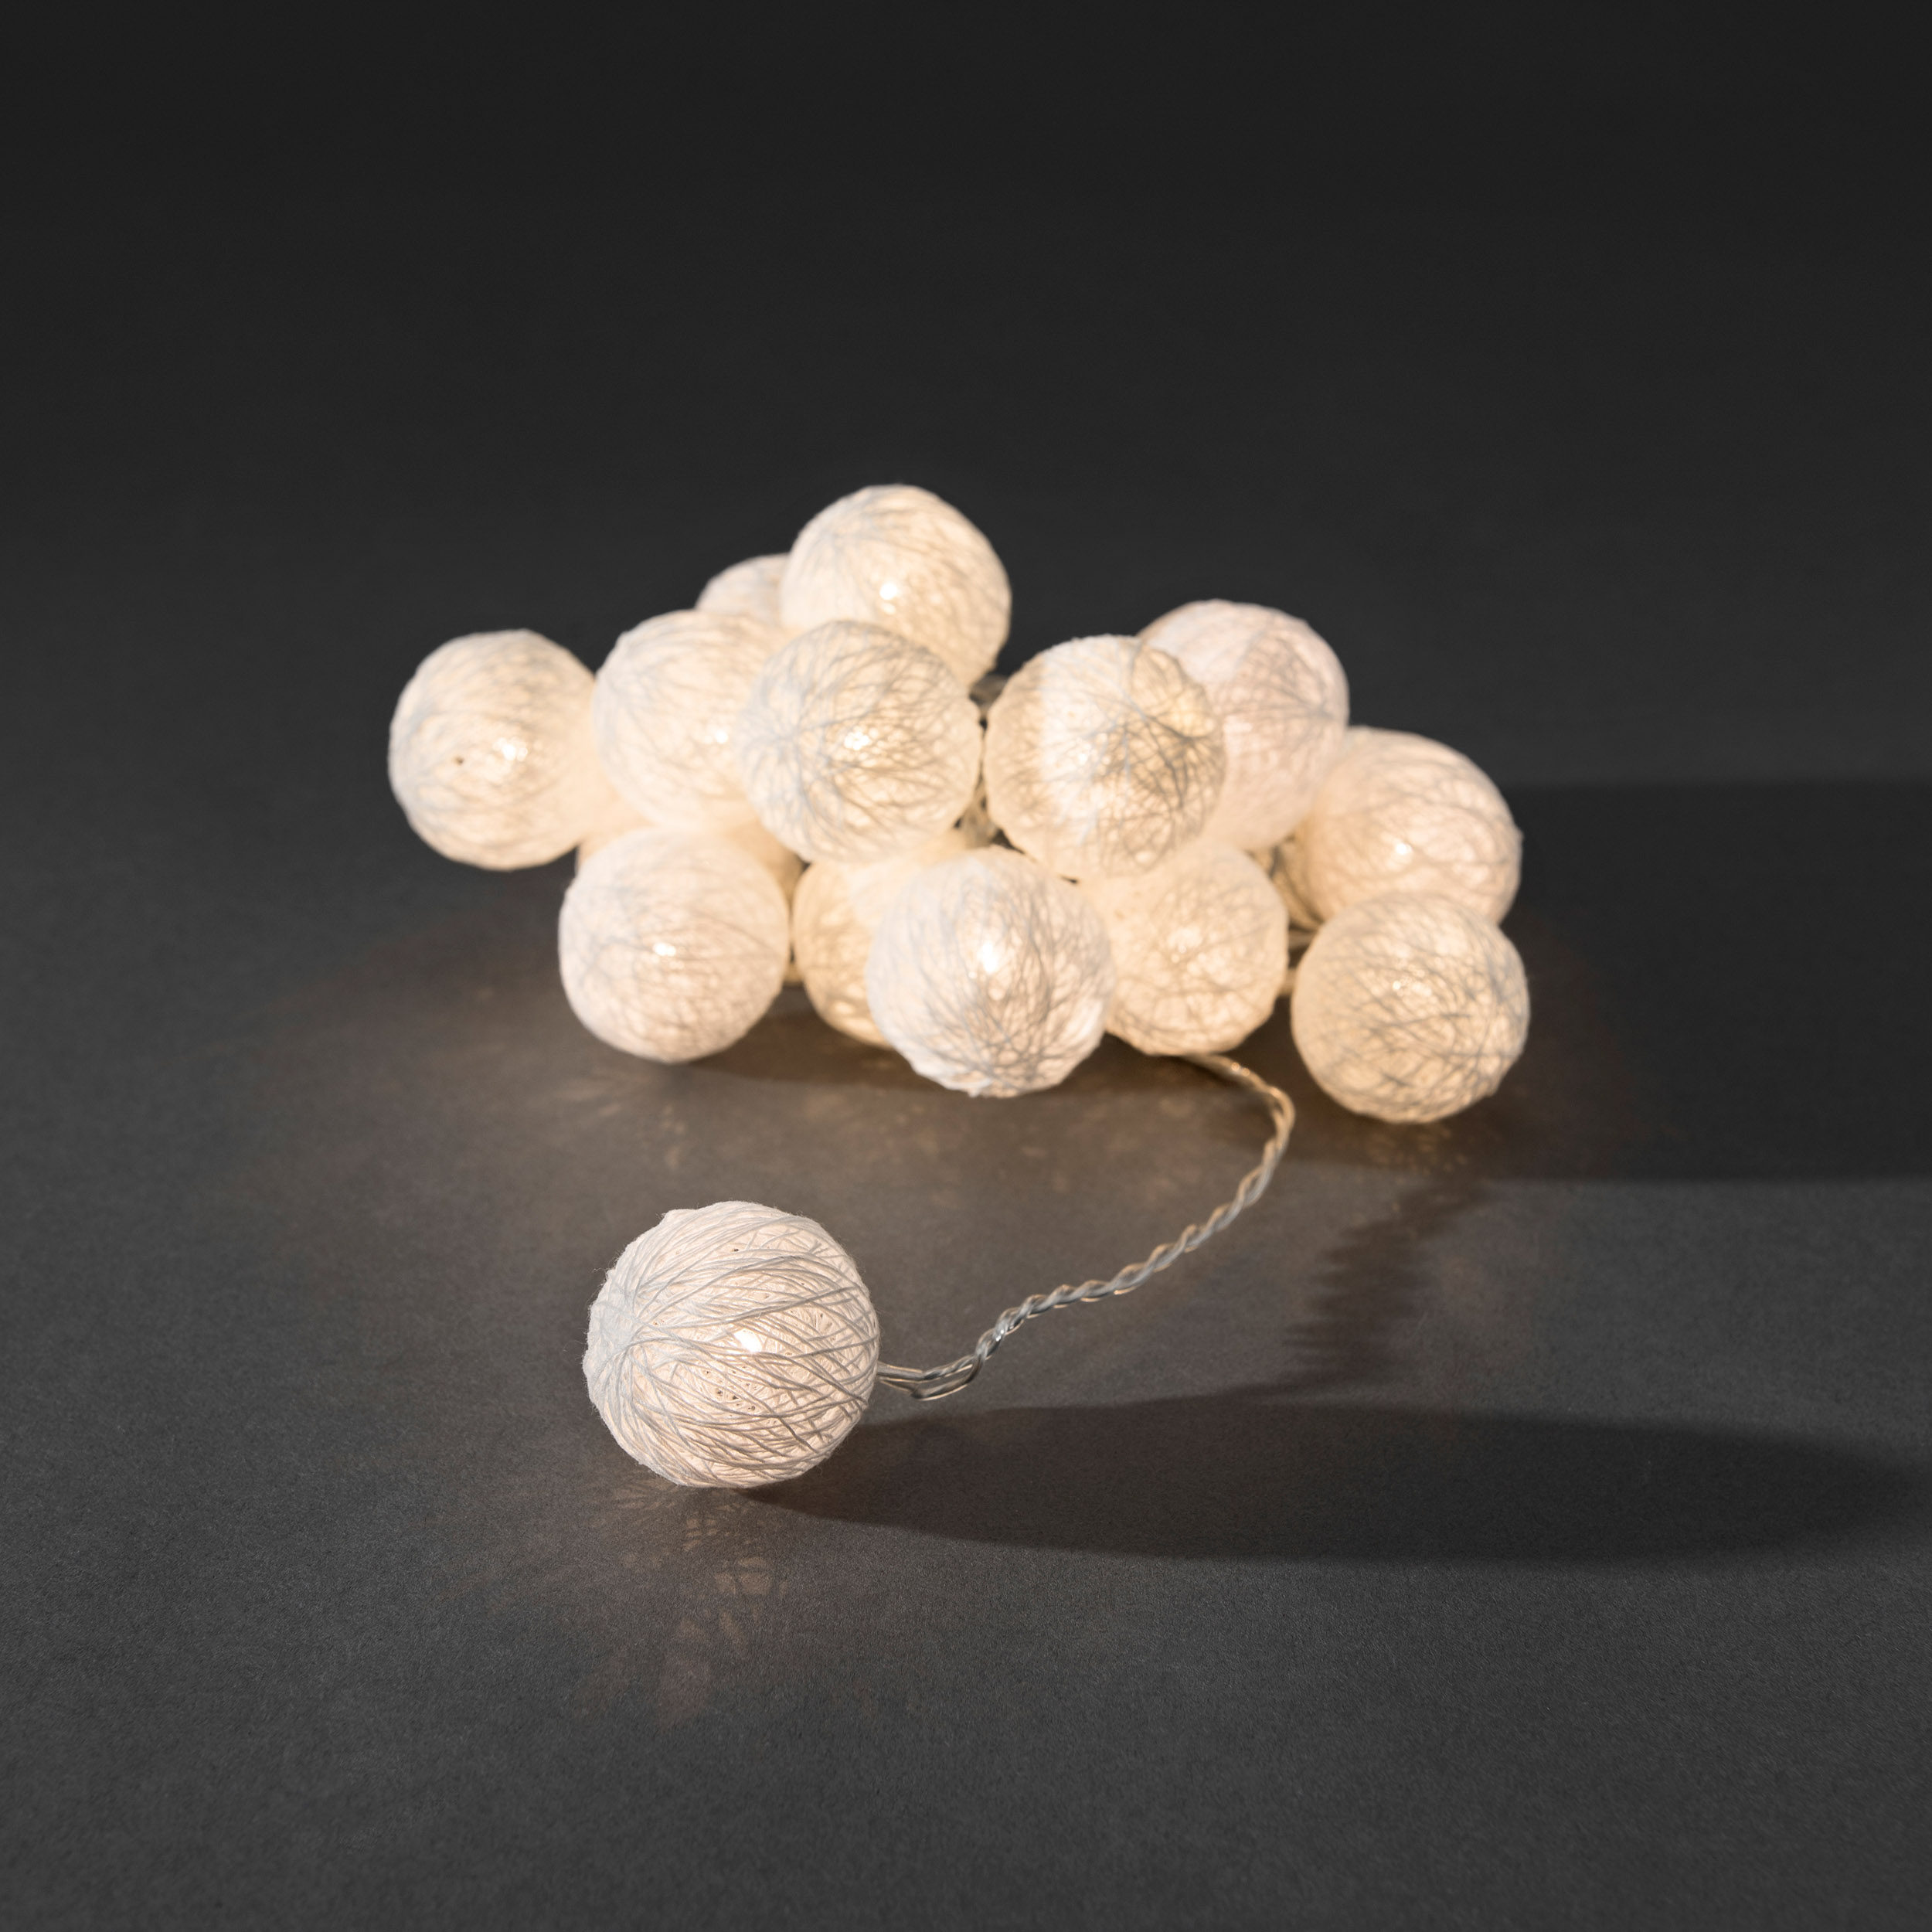 Decorative LED light set with white cotton balls, 3.5cm